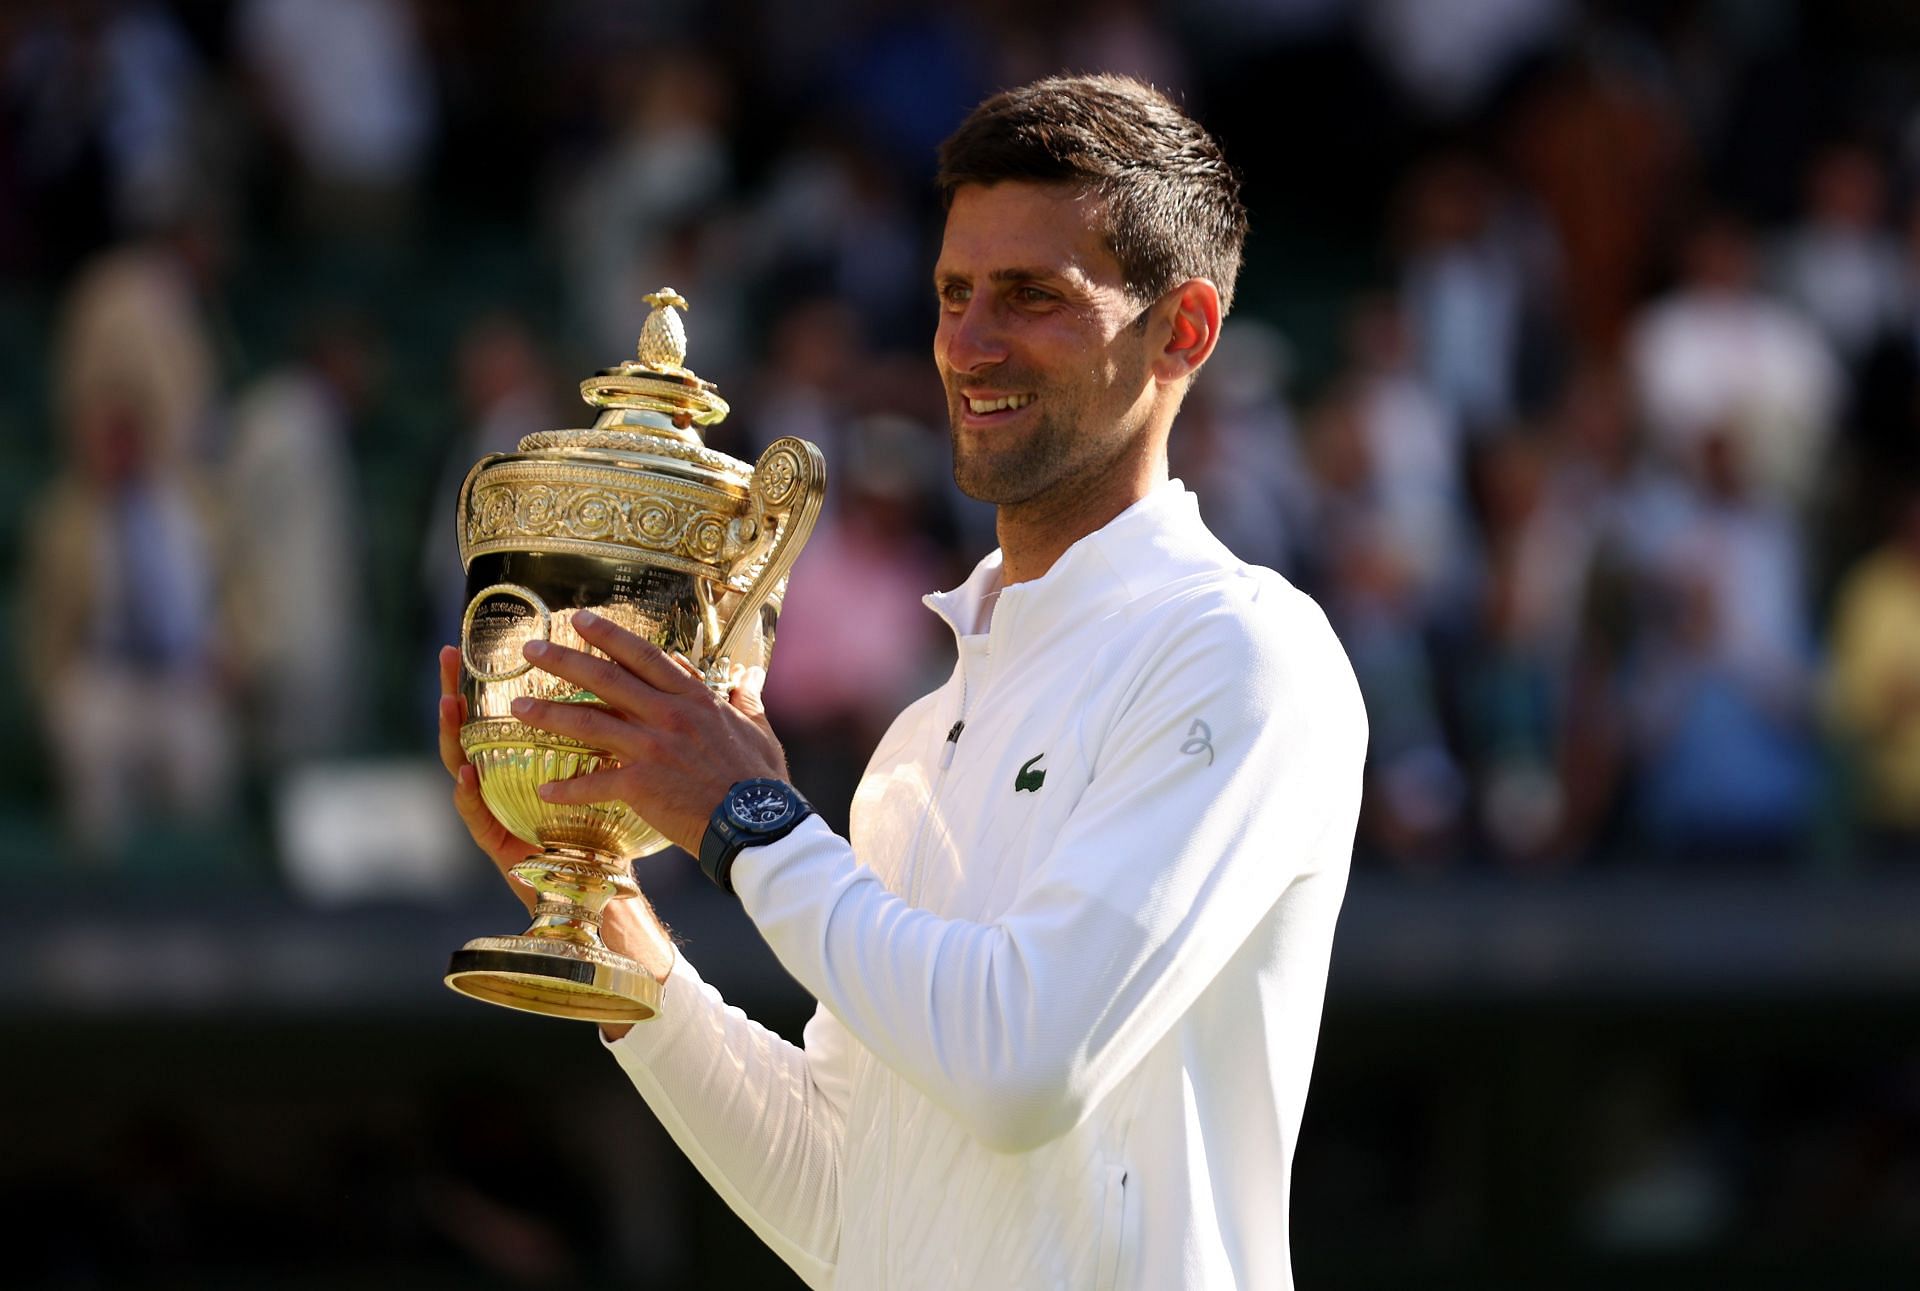 Djokovic at Wimbledon 2022 - Day 14